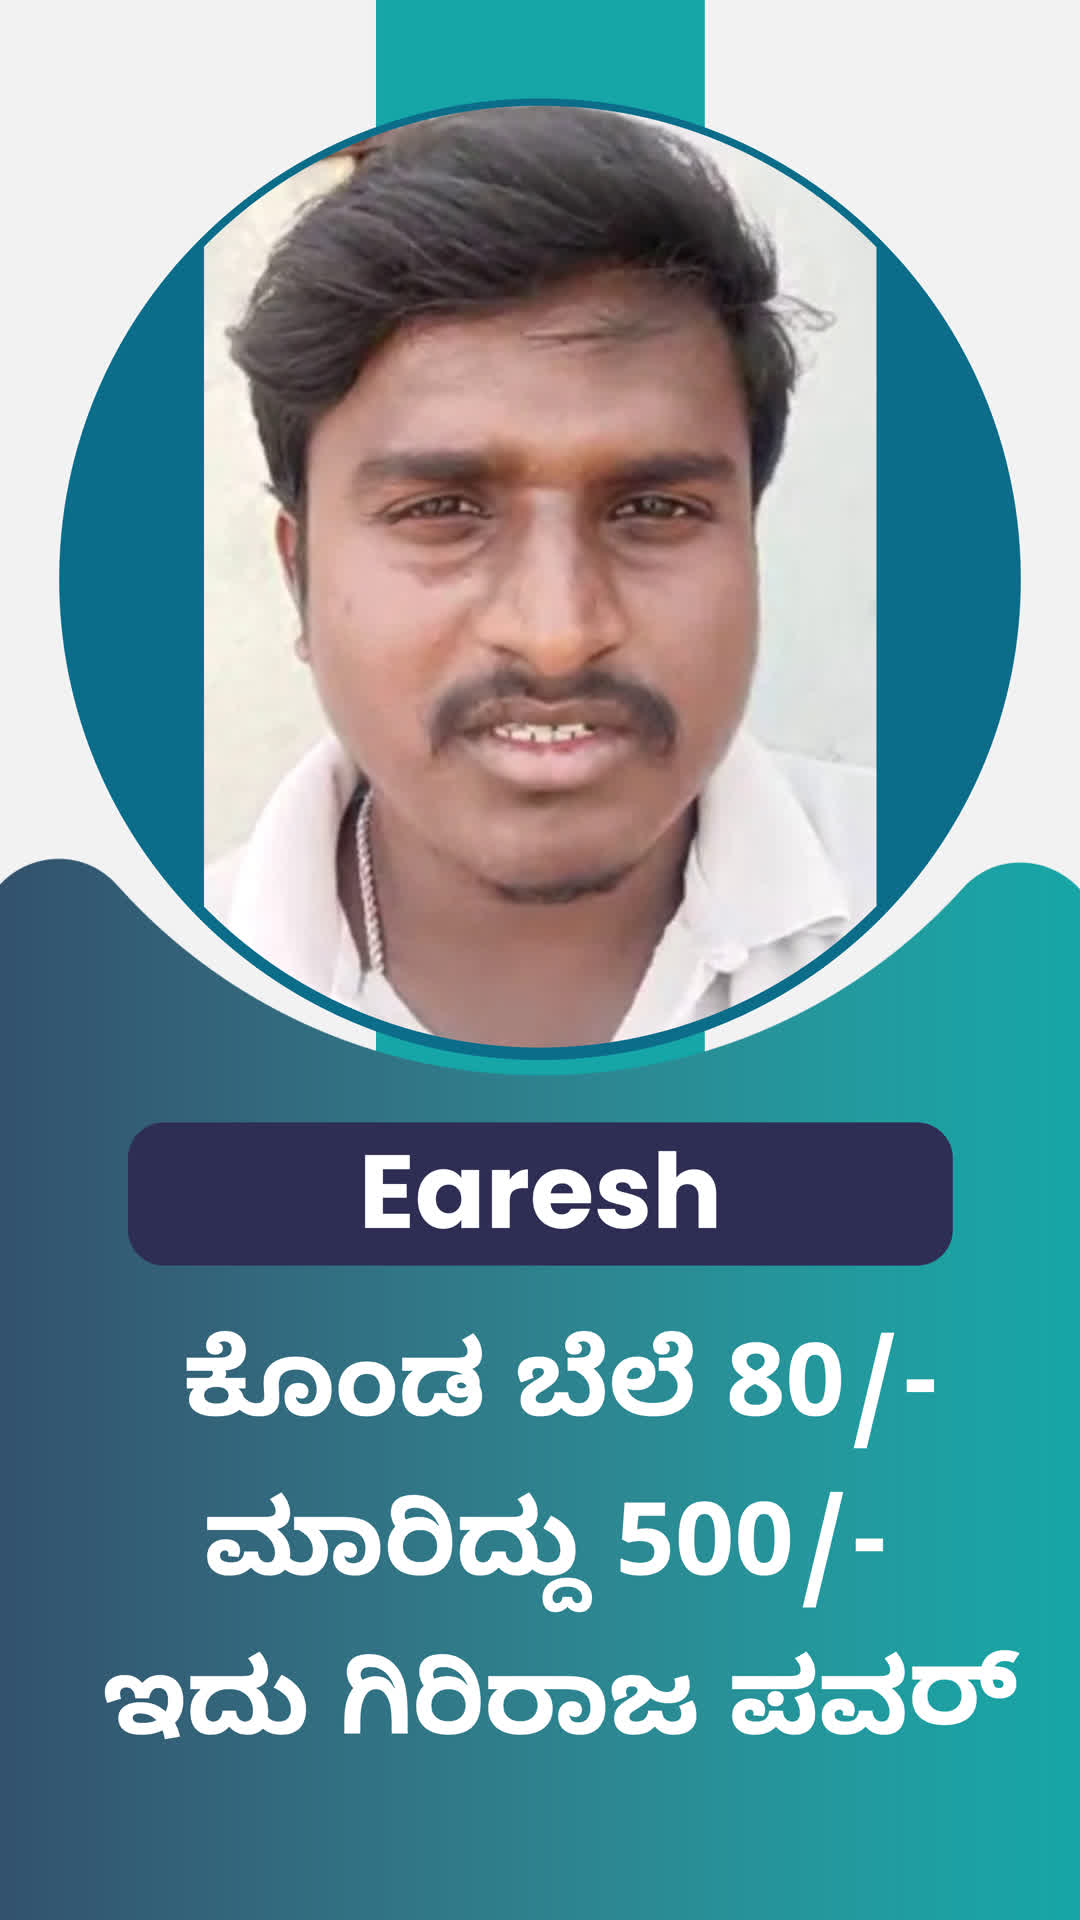 Earesh's Honest Review of ffreedom app - Raichur ,Karnataka